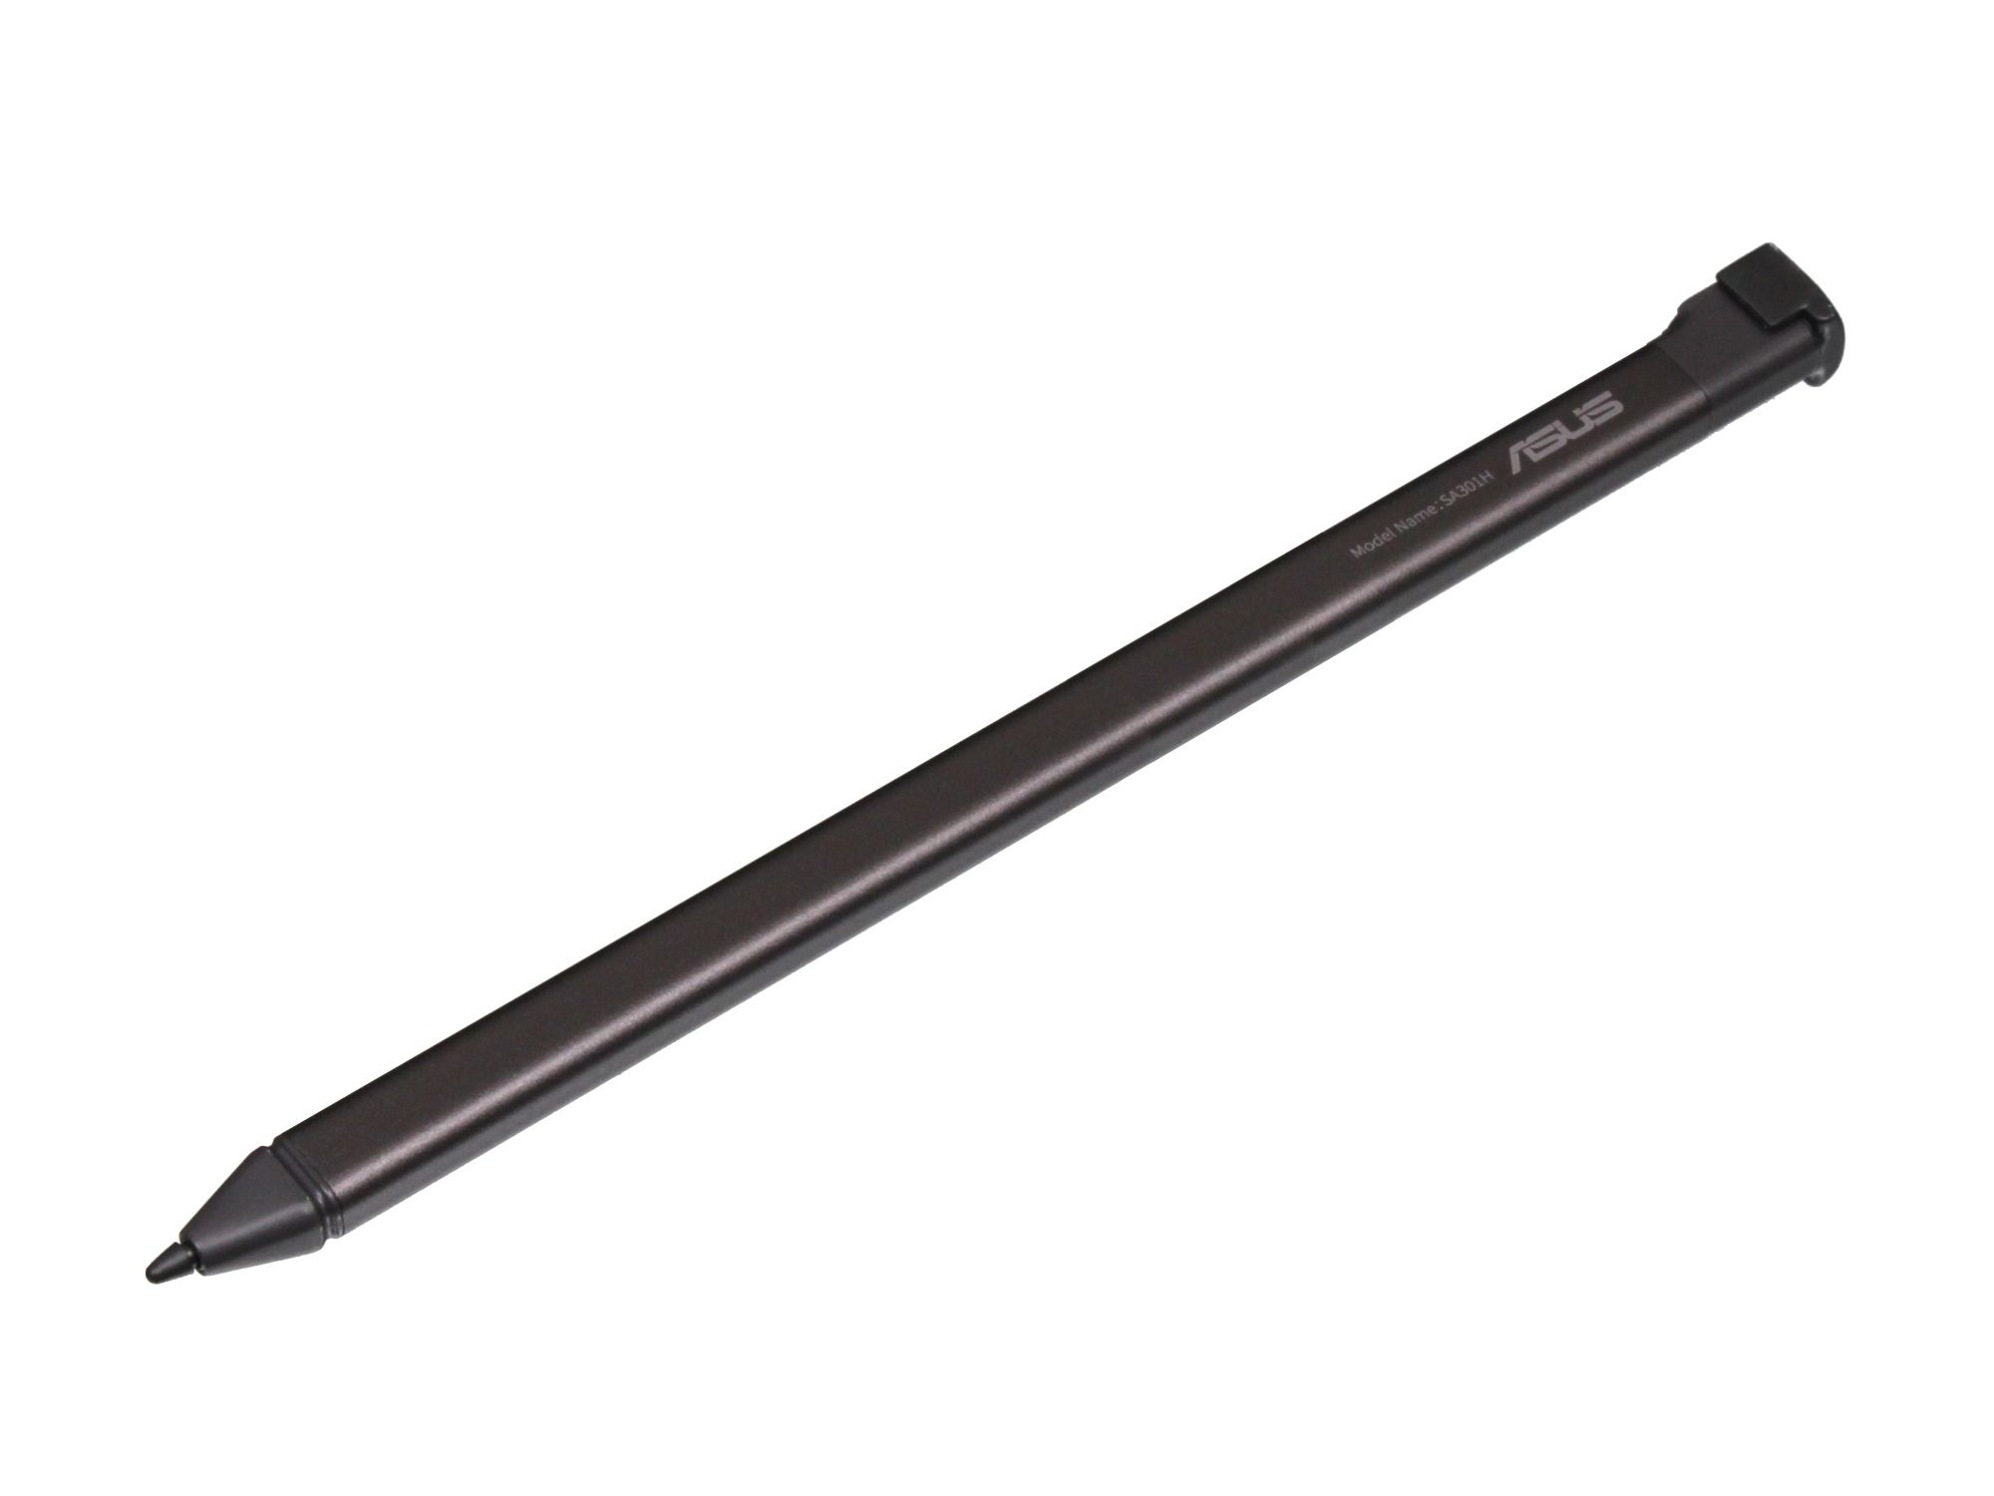 Asus 04190-002800 Stylus Pen